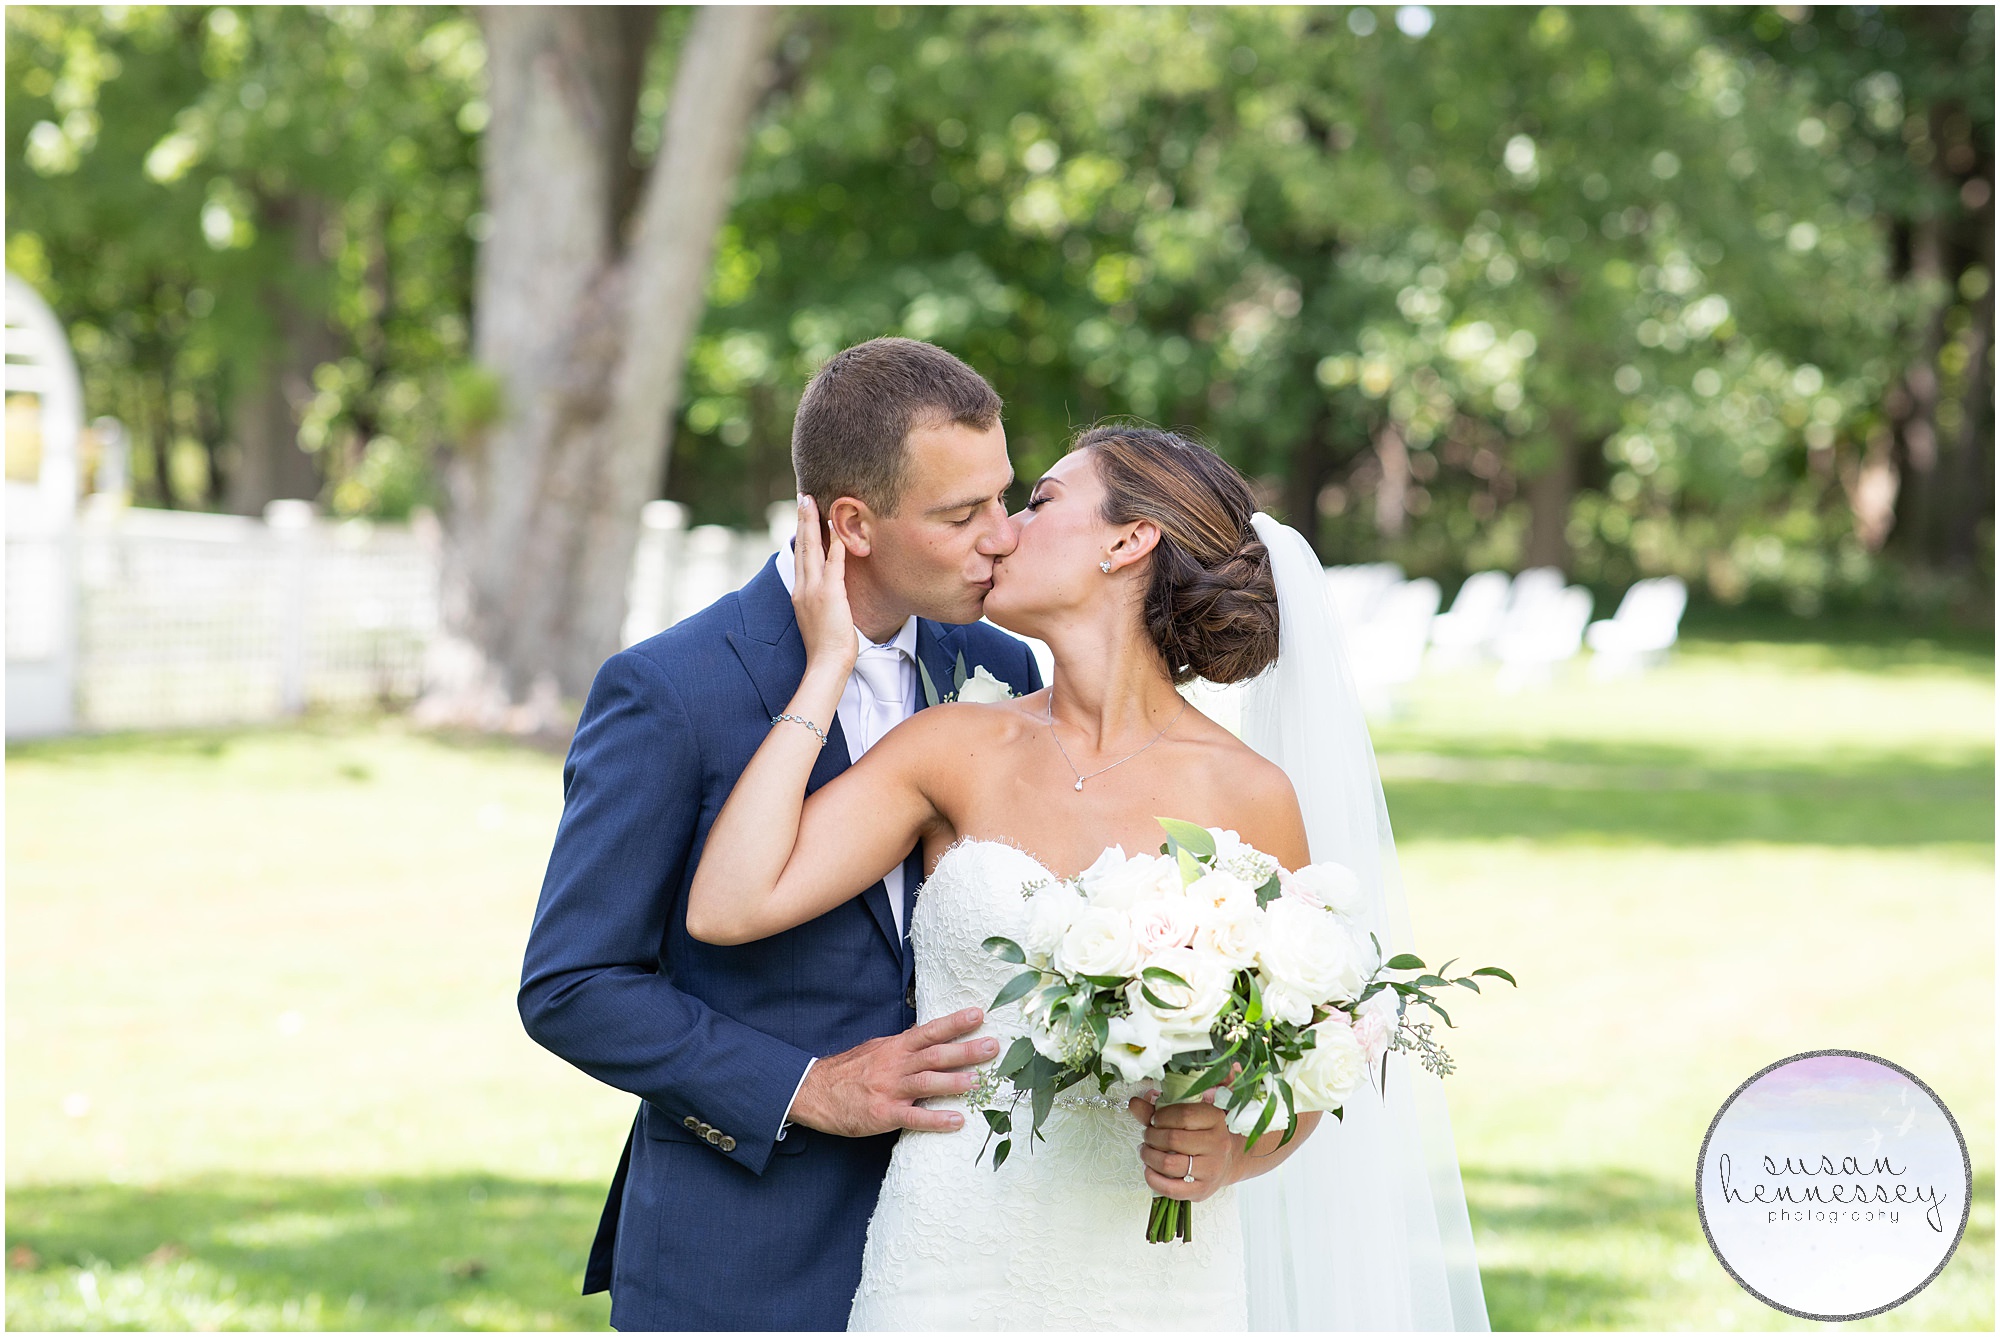 Bride and groom kiss at wedding amid COVID-19 pandemic